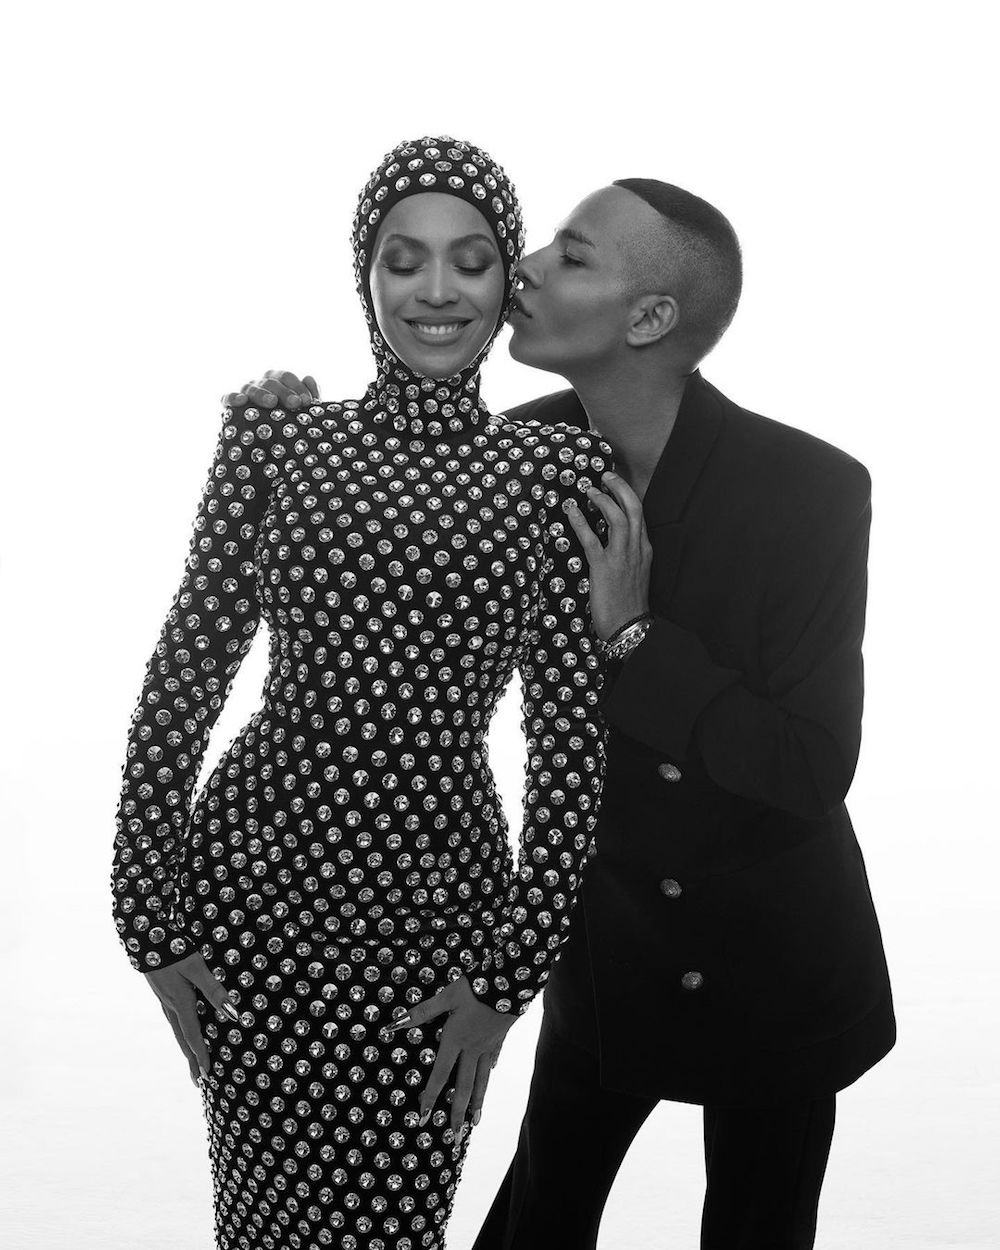 Balmain x Beyoncé used fashion to portray the album tracklist renaissance